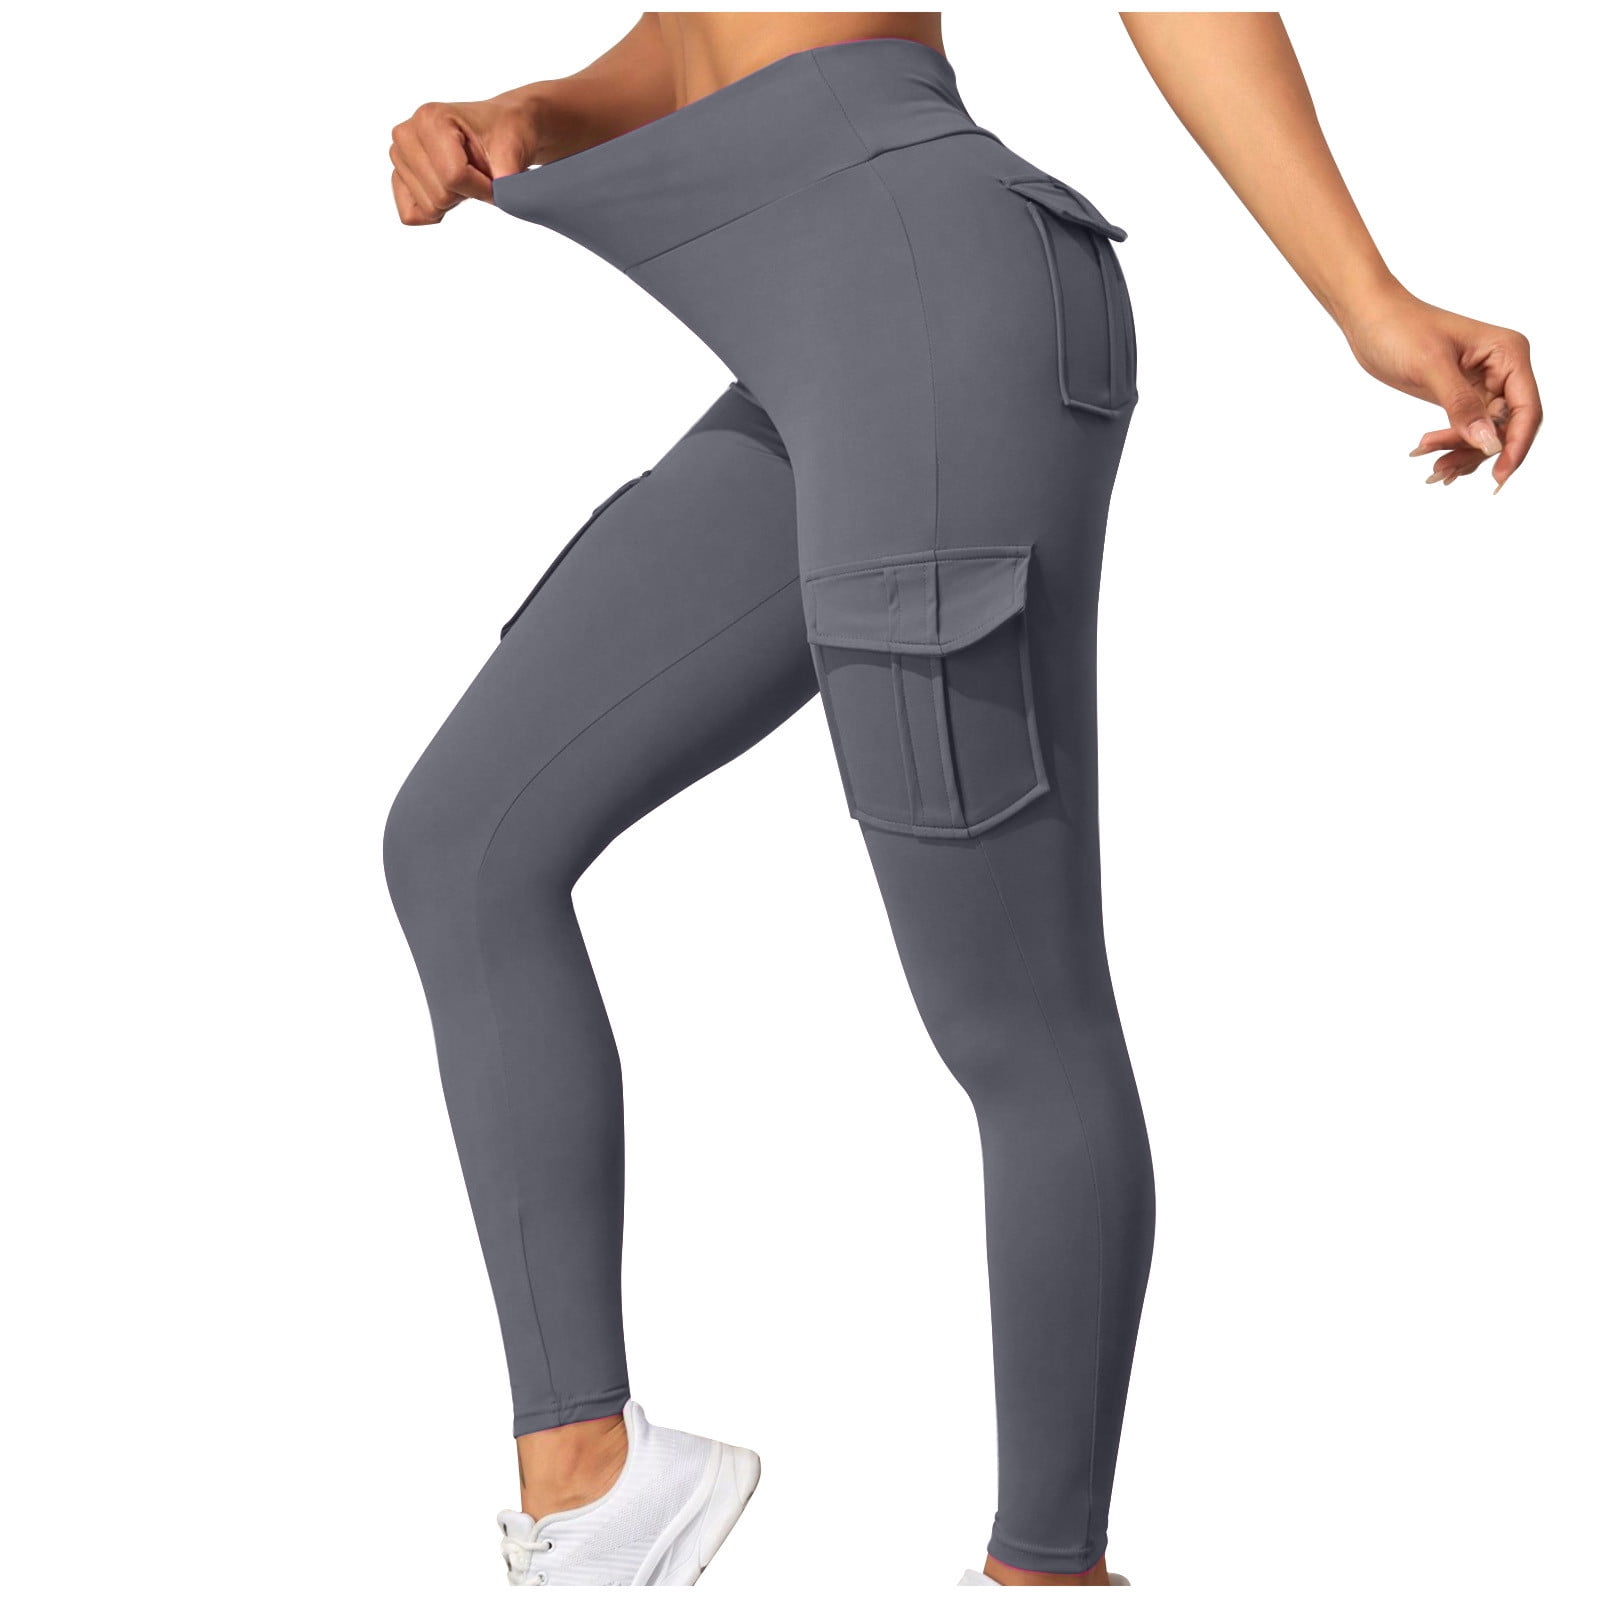 Winter Cargo Pants For Women Plus Size Leggings Workout Sports Athletic  Pants Fitness Riding Pants Yoga Pants Free Shipping - AliExpress